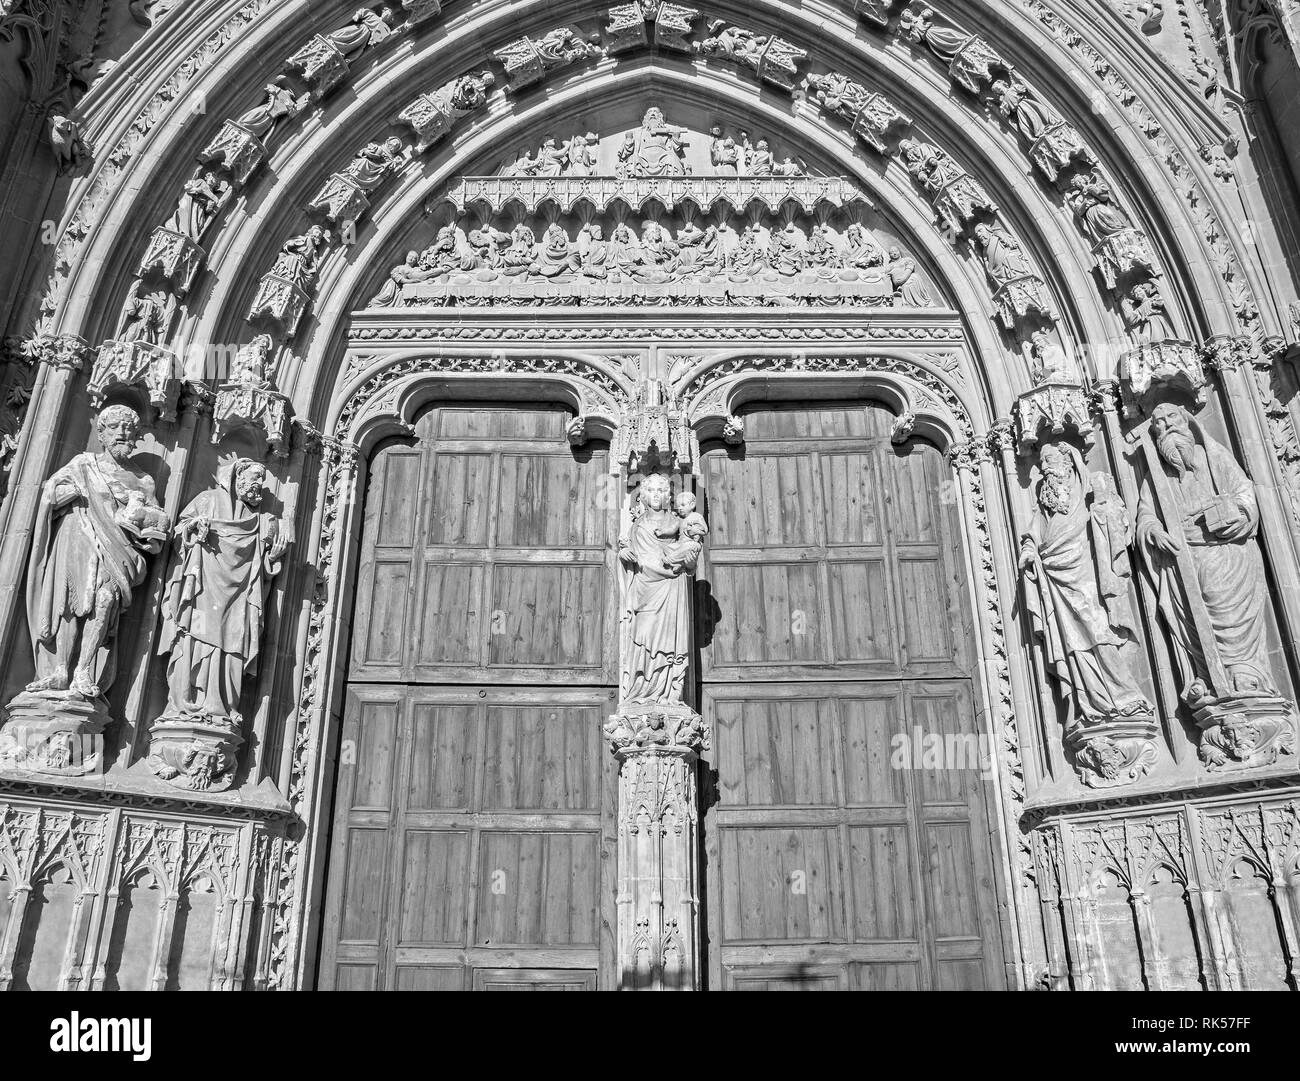 PALMA DE MALLORCA, SPANIEN - Januar 30, 2019: Der süden Portal der Kathedrale La Seu mit dem Stein Relief des Letzten Abendmahls durch Meister Pere Morey und Gui Stockfoto